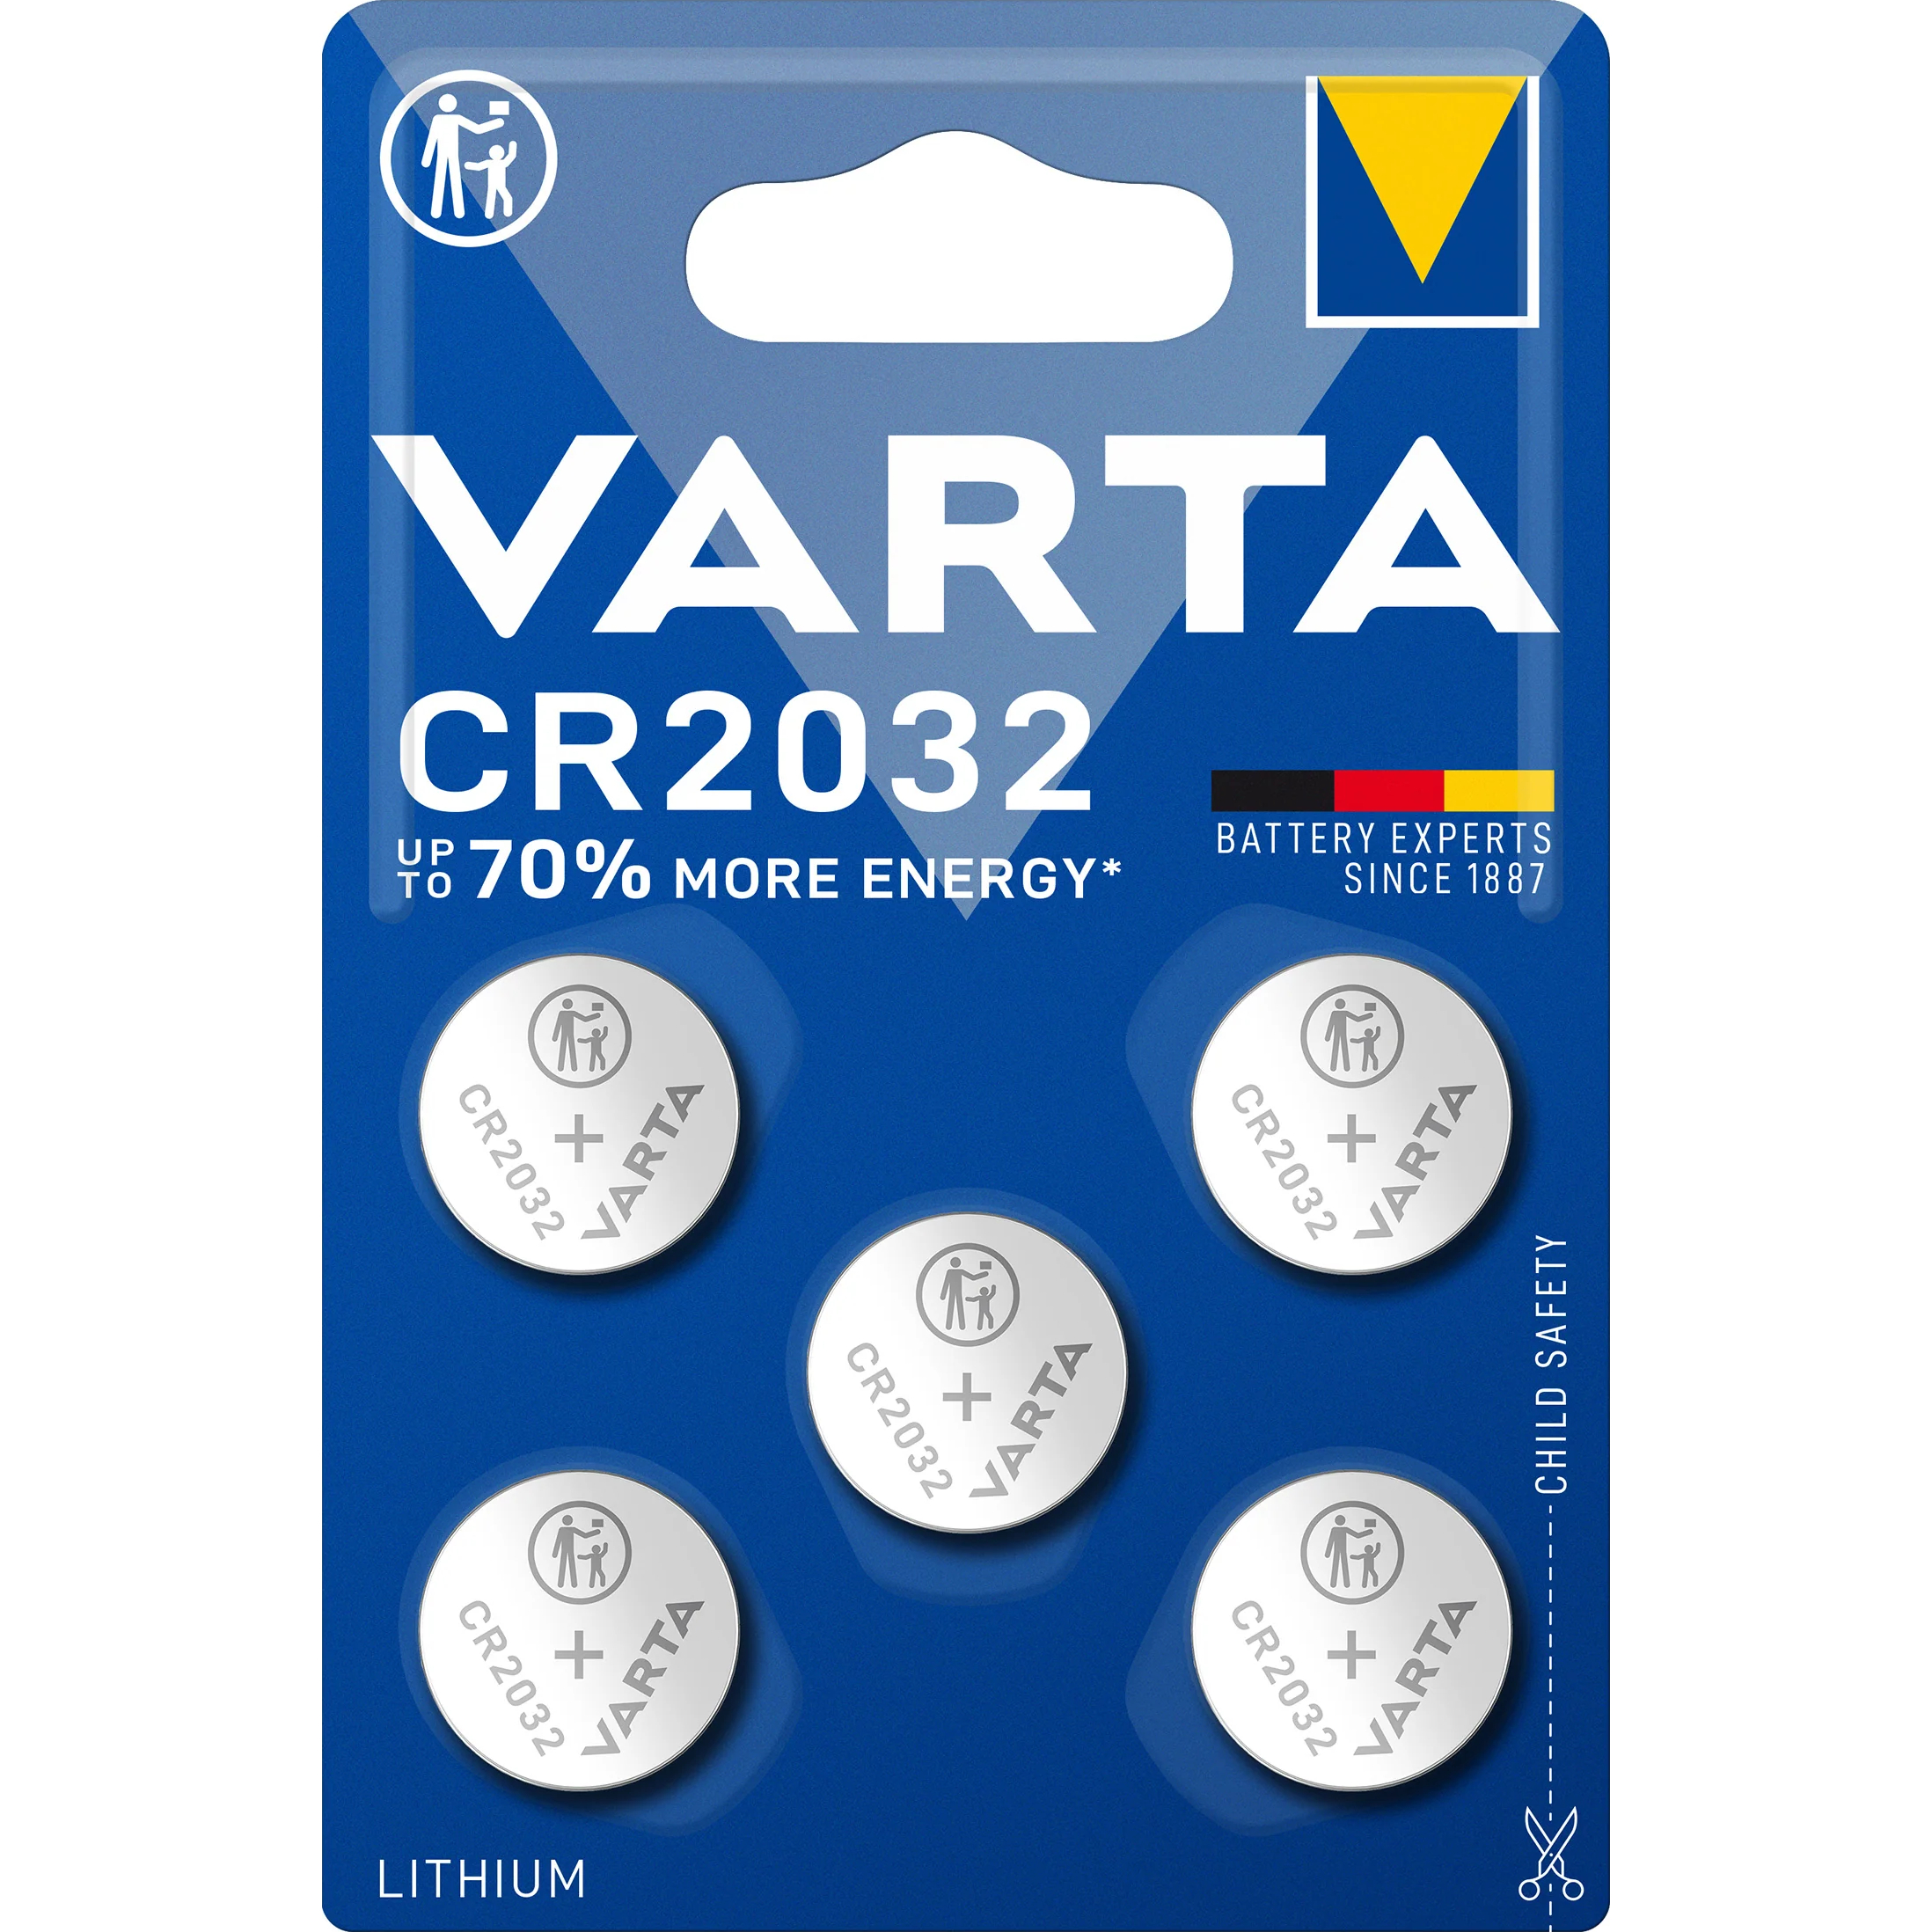 Батарейка VARTA CR 2032 BLI 5 LITHIUMфото1